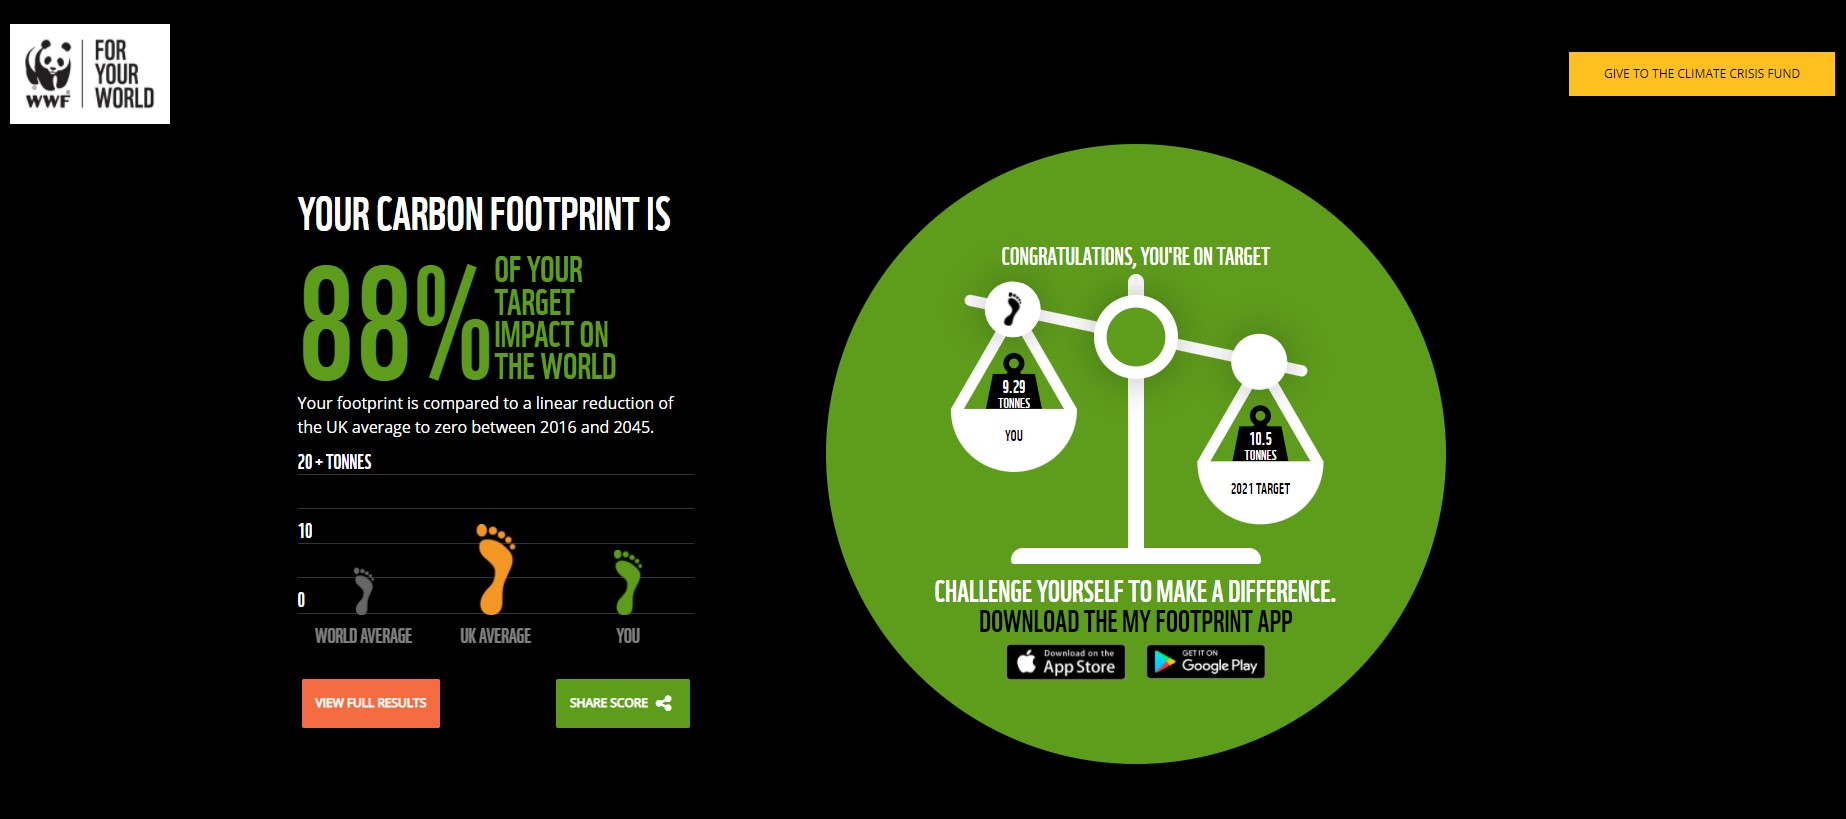 WWF Carbon Footprint Calculator result 2021